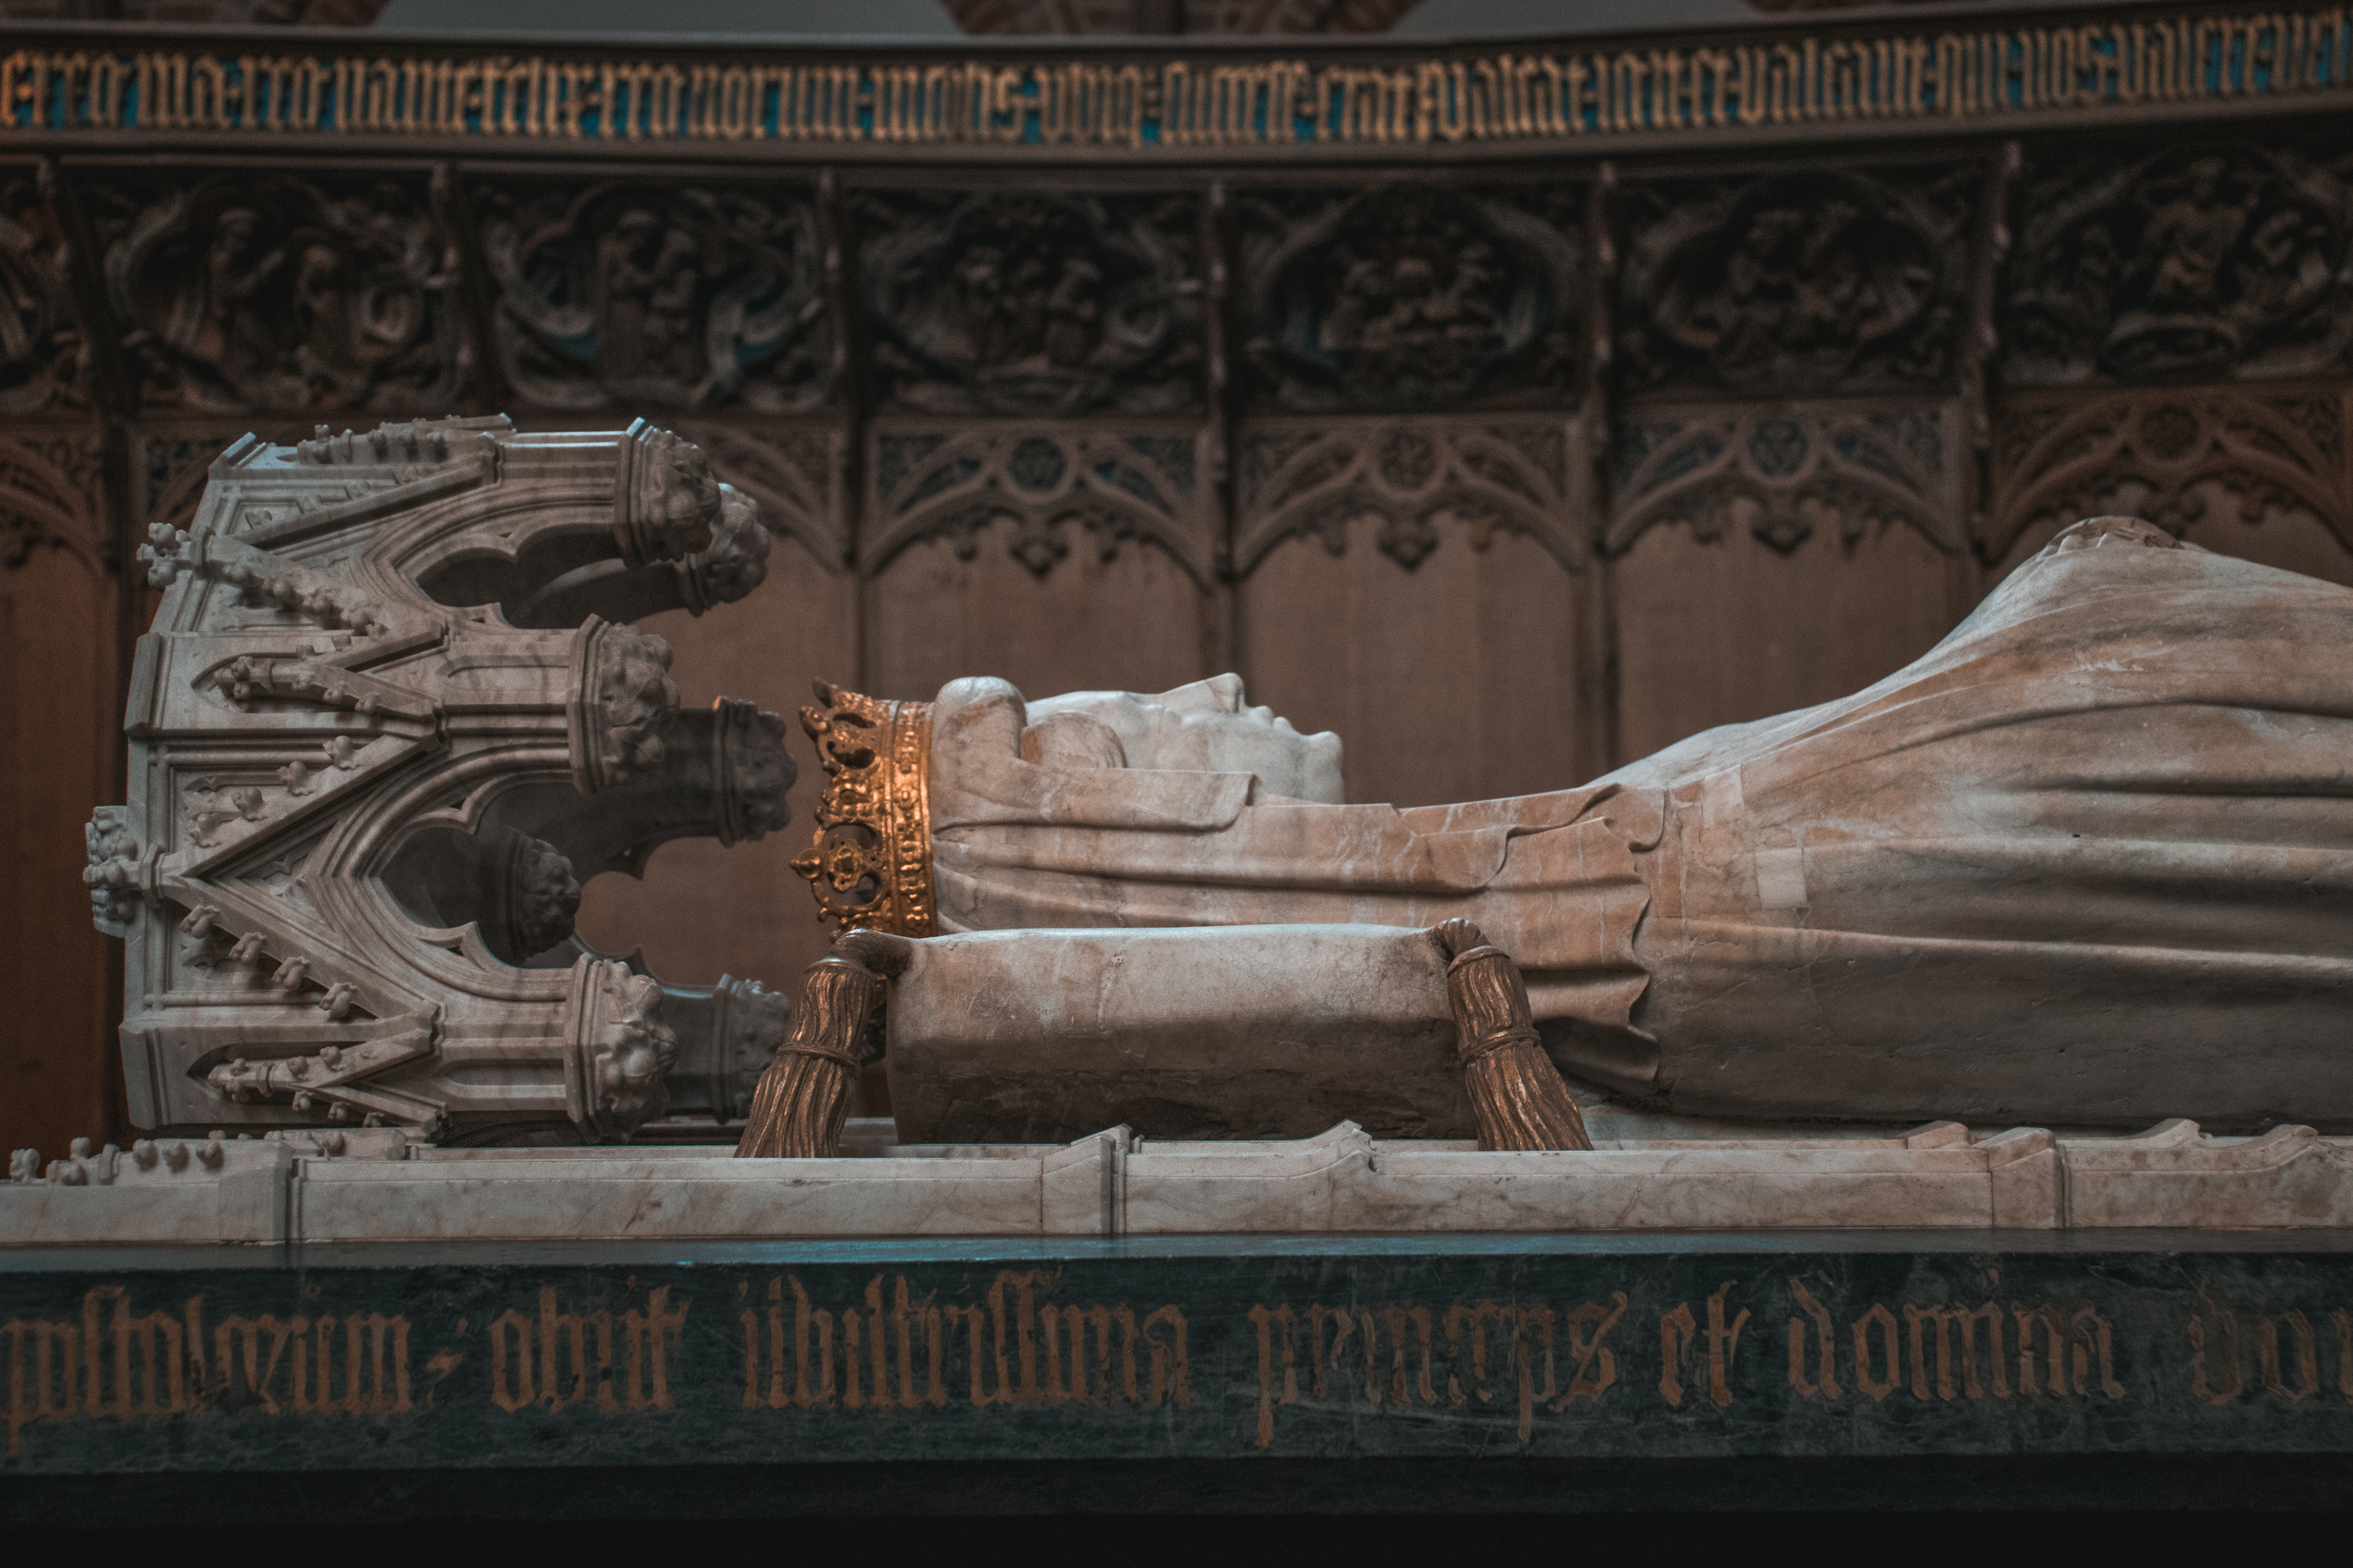 Sarcophagus of Queen Margaret I of Denmark, Norway and Sweden. Photo: iStock